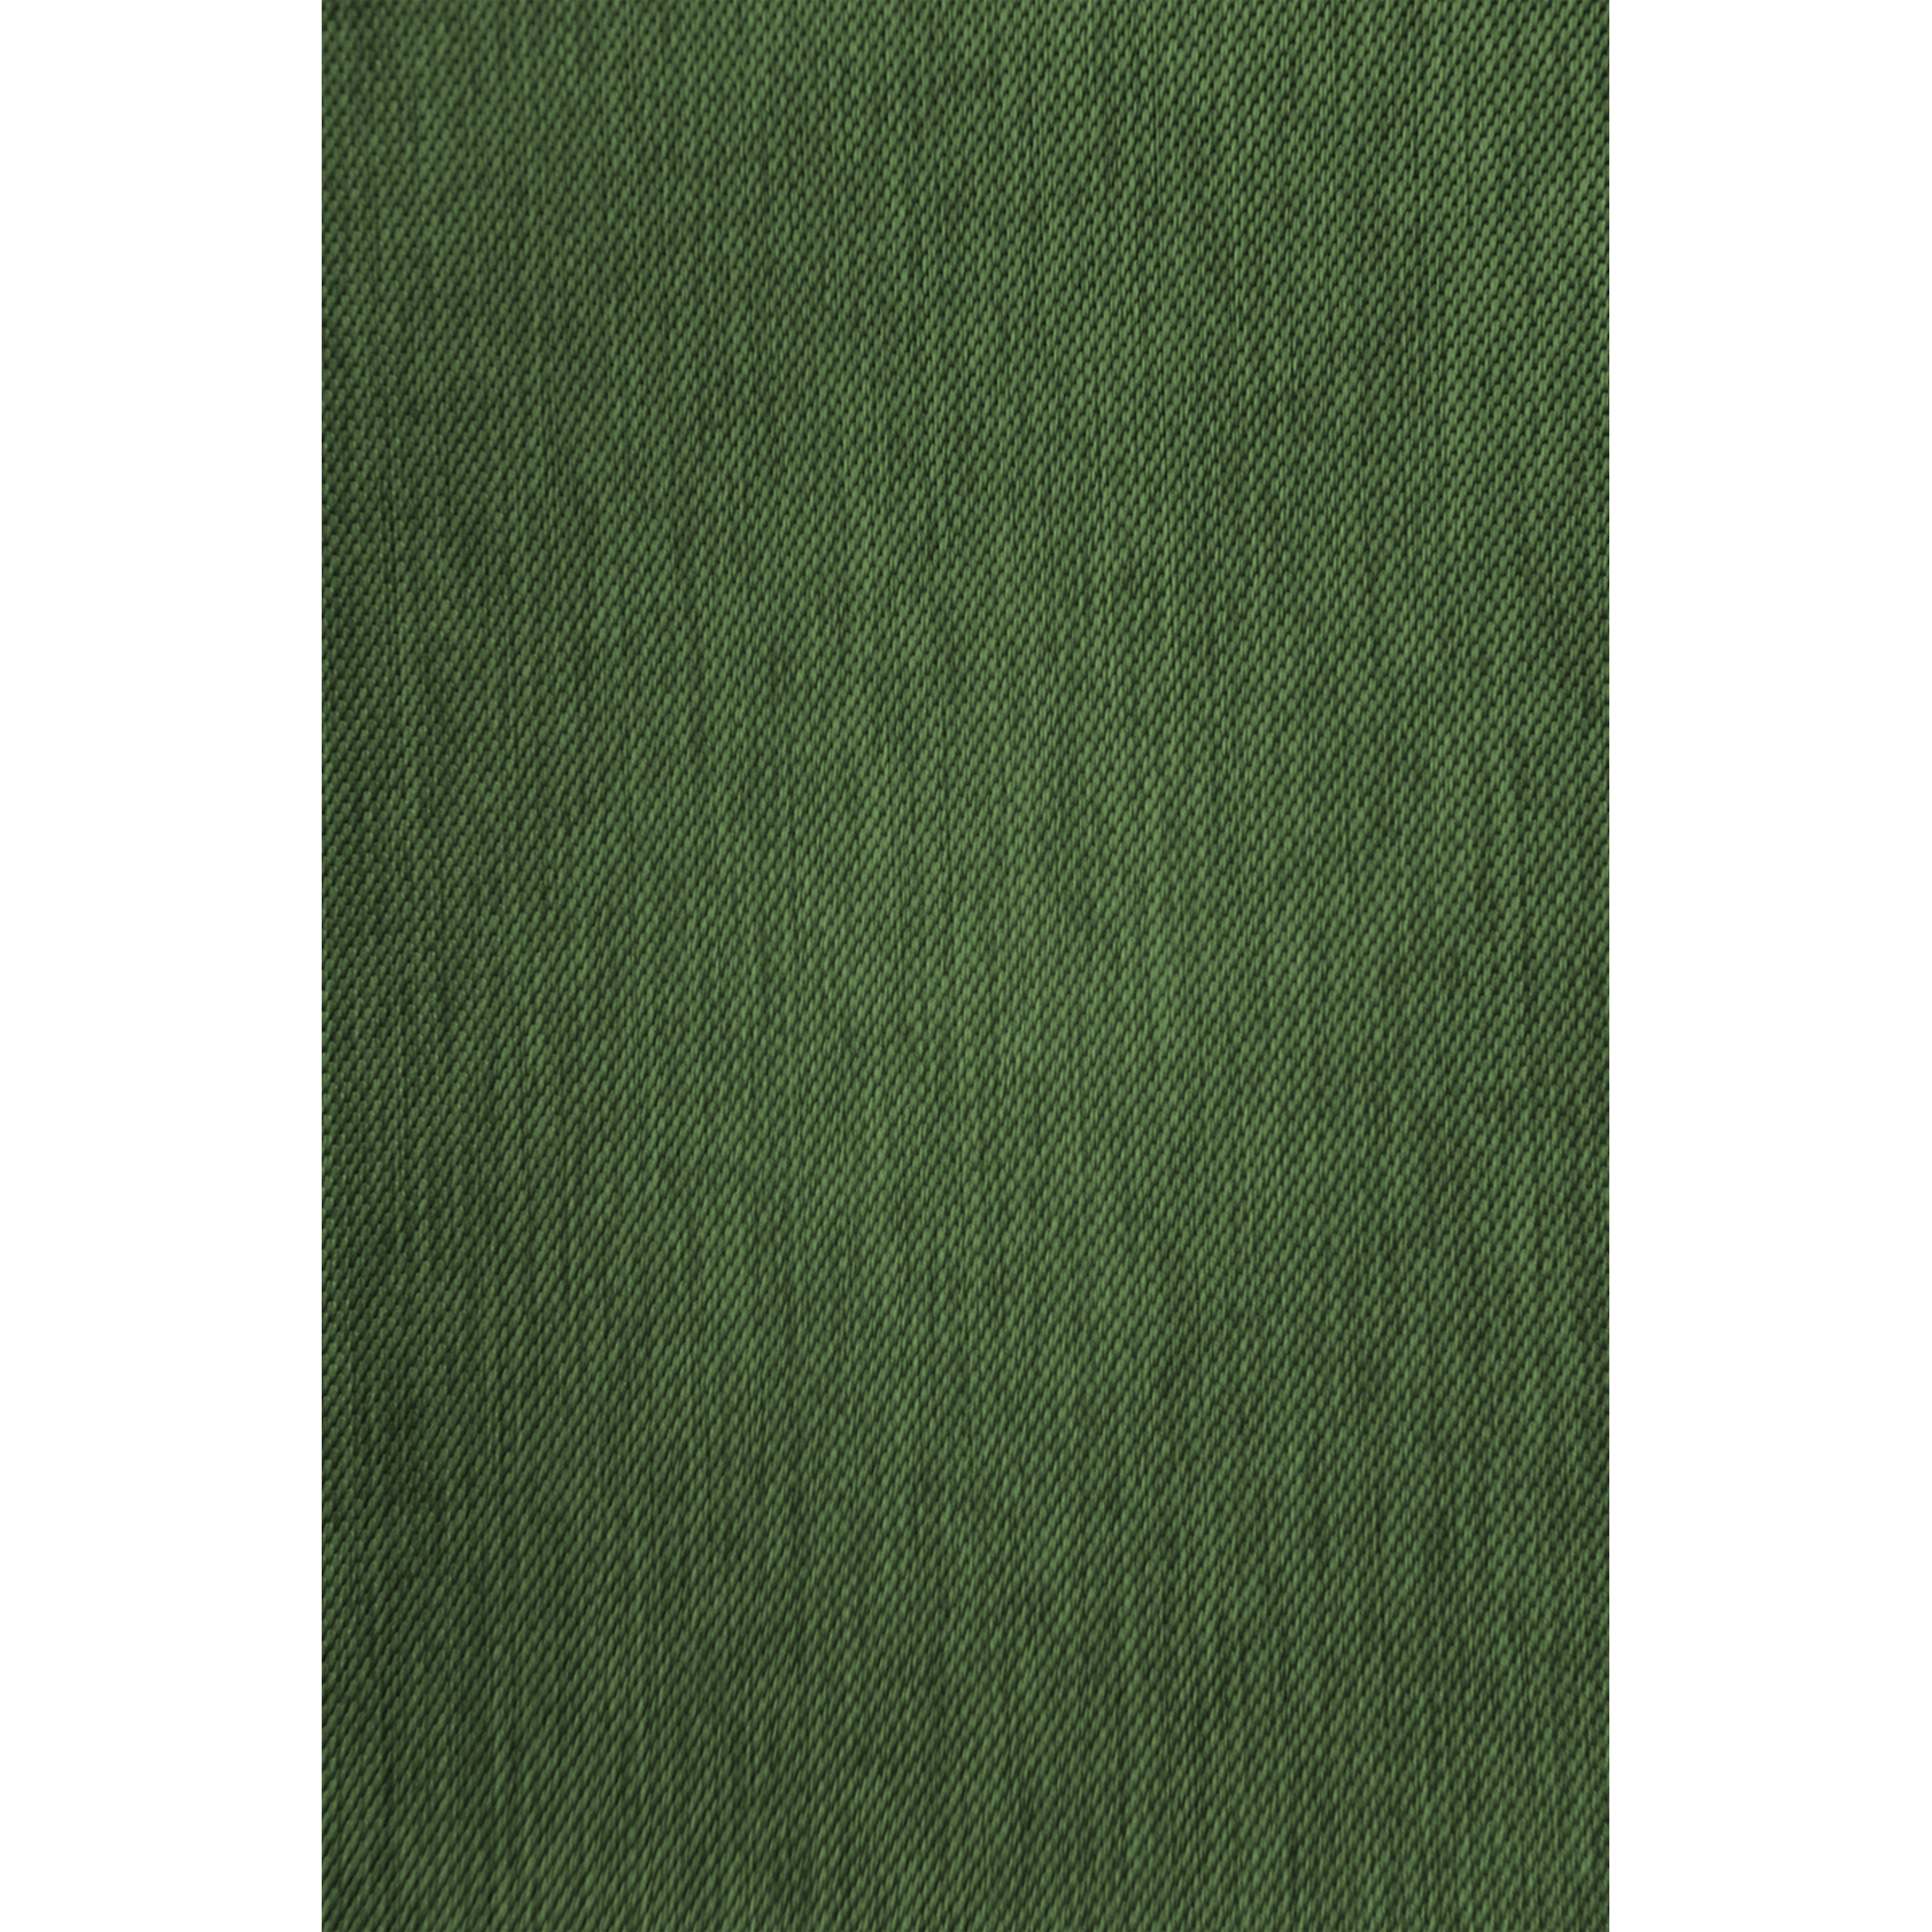 Verdunkelungsvorhang 'Galdin' grün 245 x 140 cm + product picture